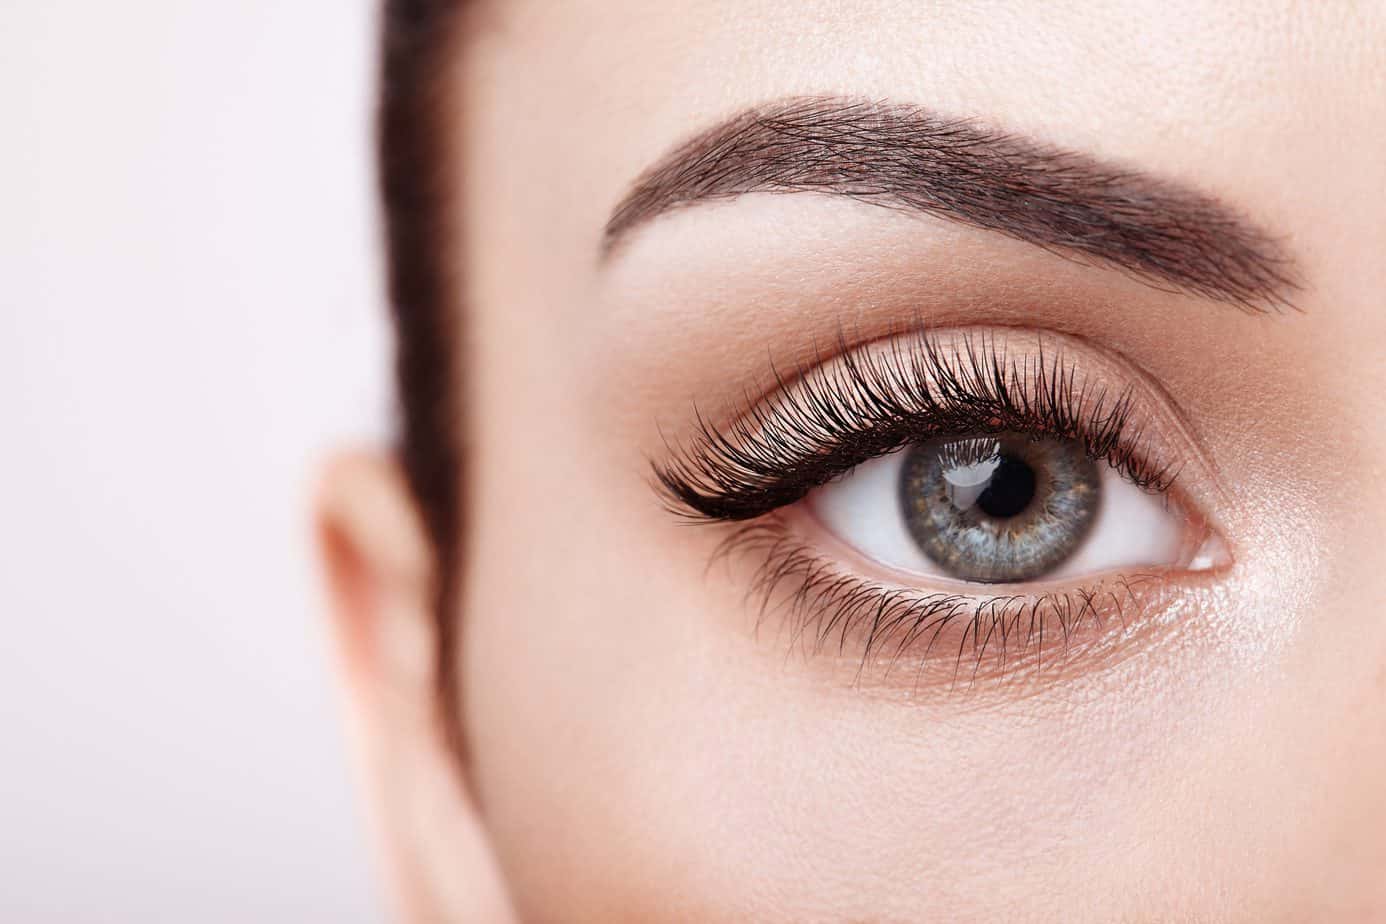 Castor oil for eyelashes – how to use?